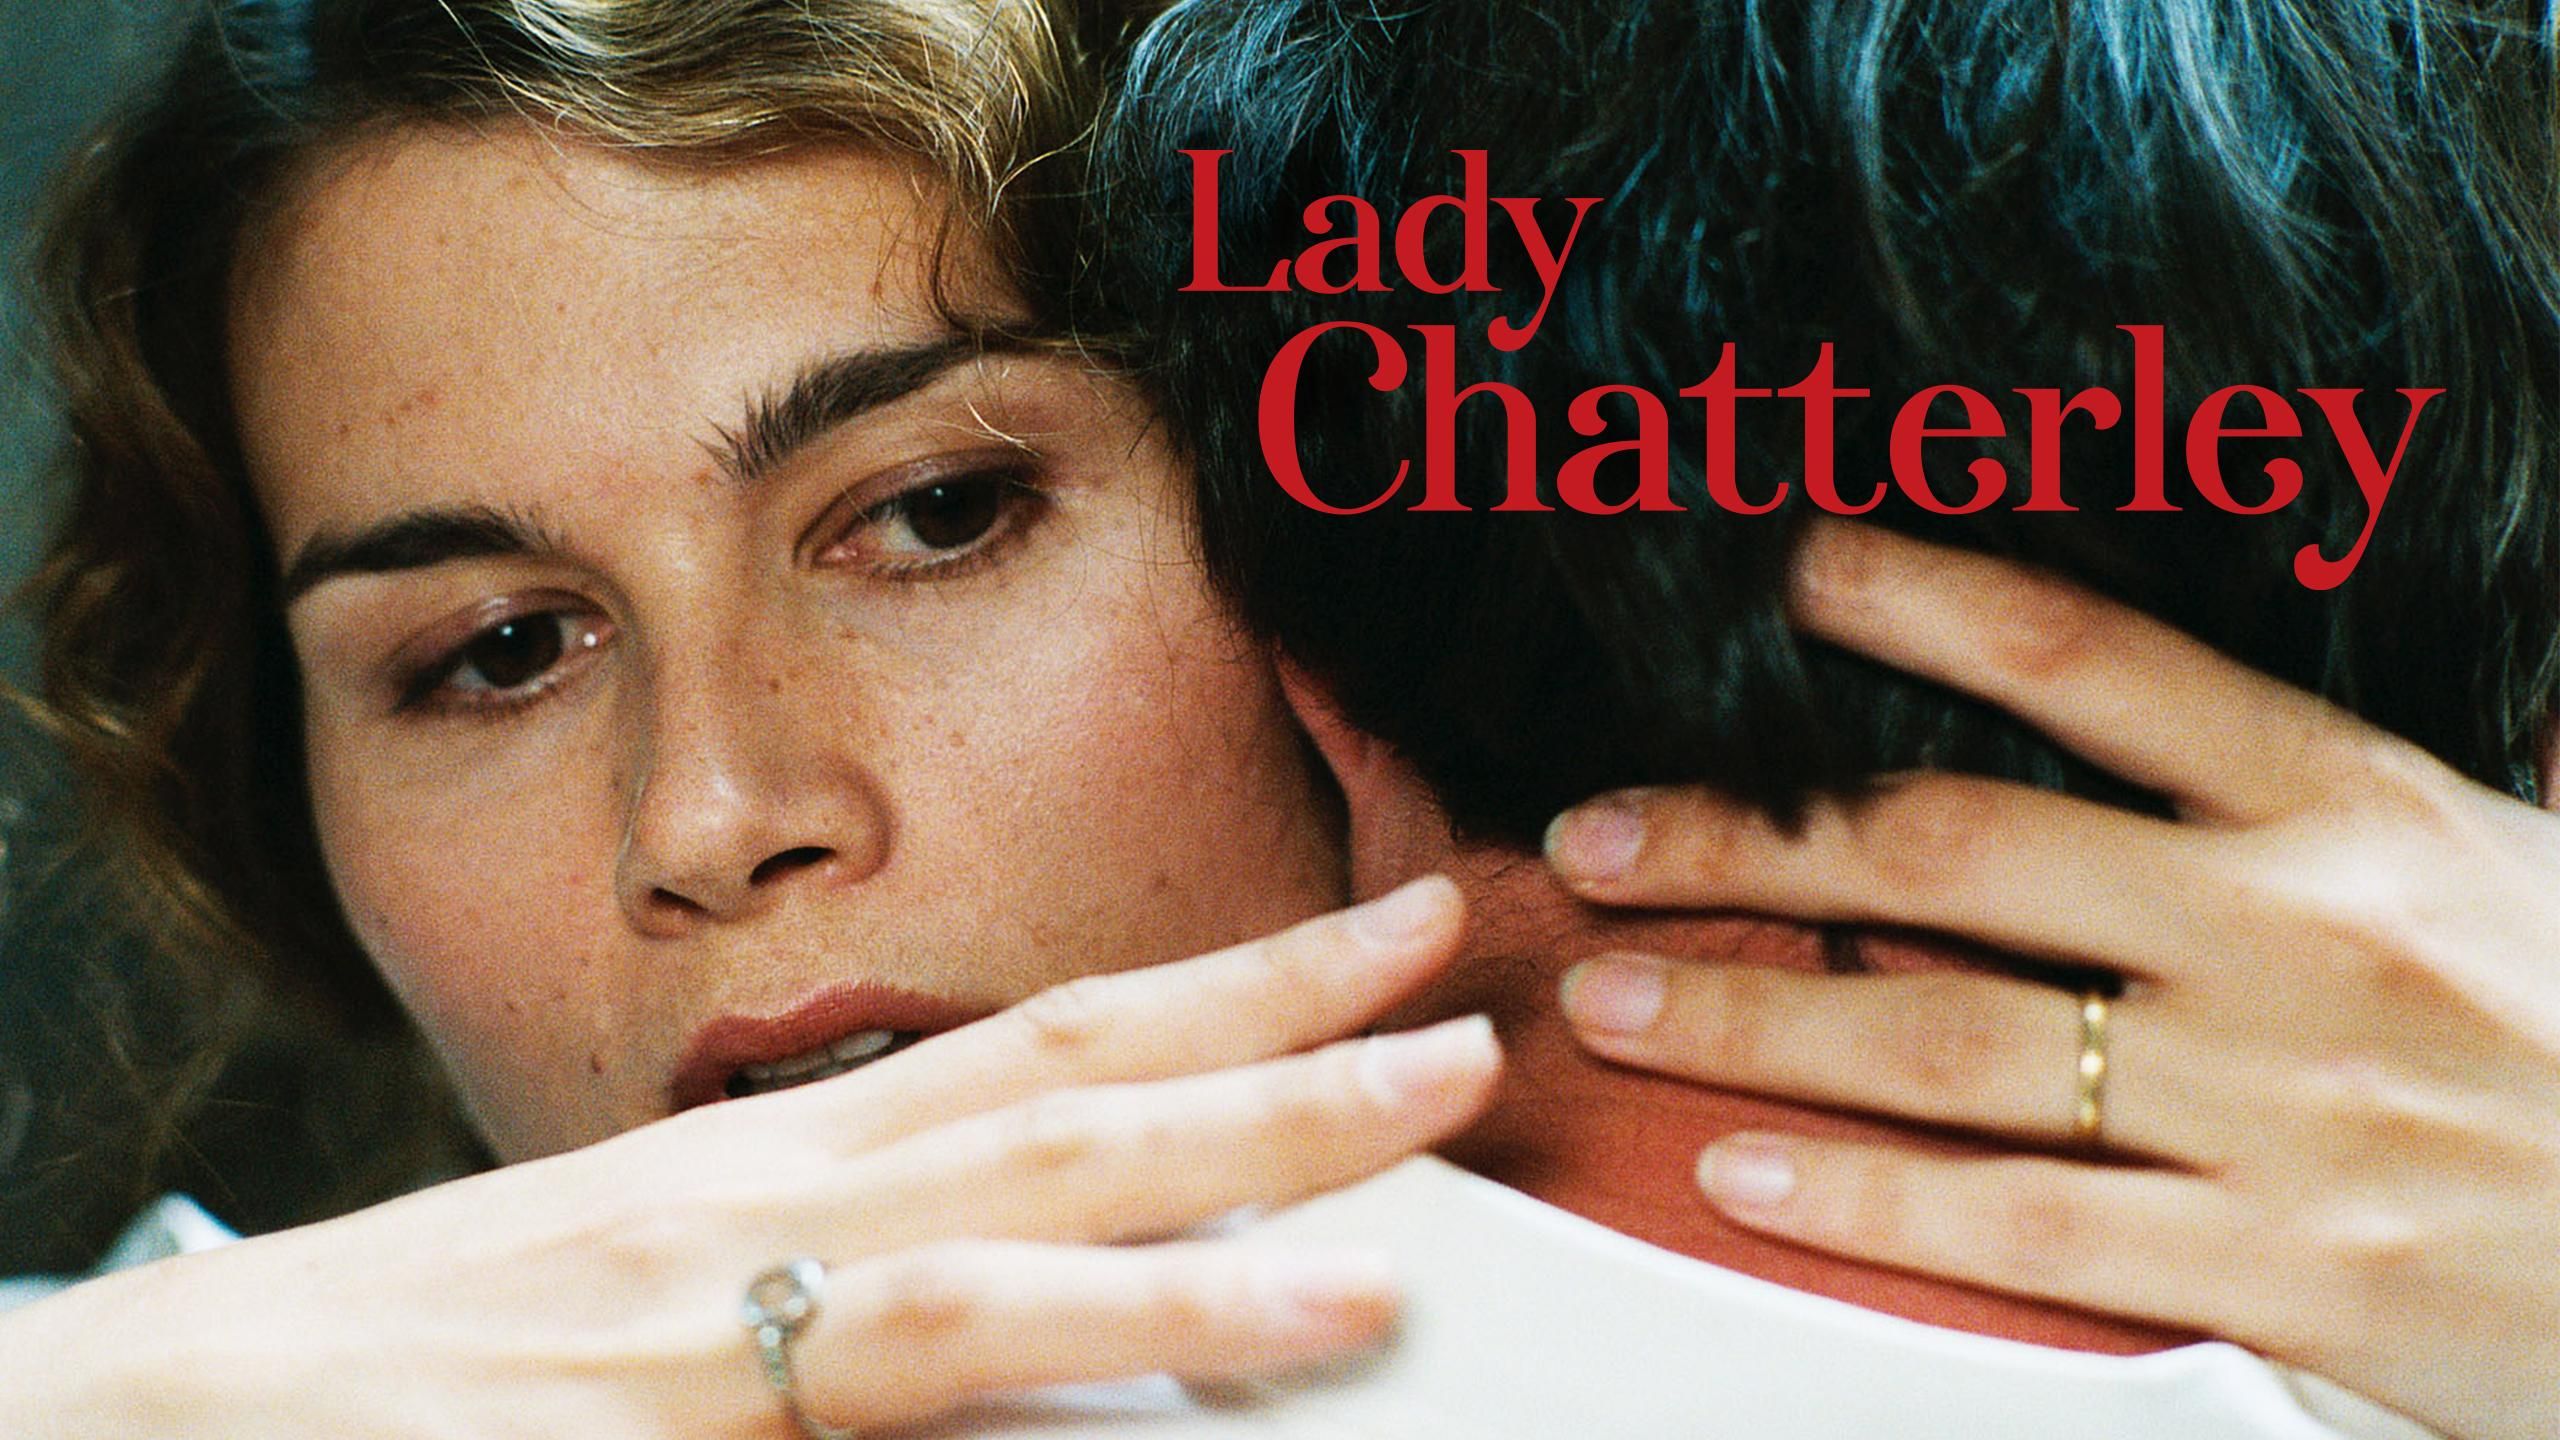 borah mason recommends Lady Chatterley Full Movie